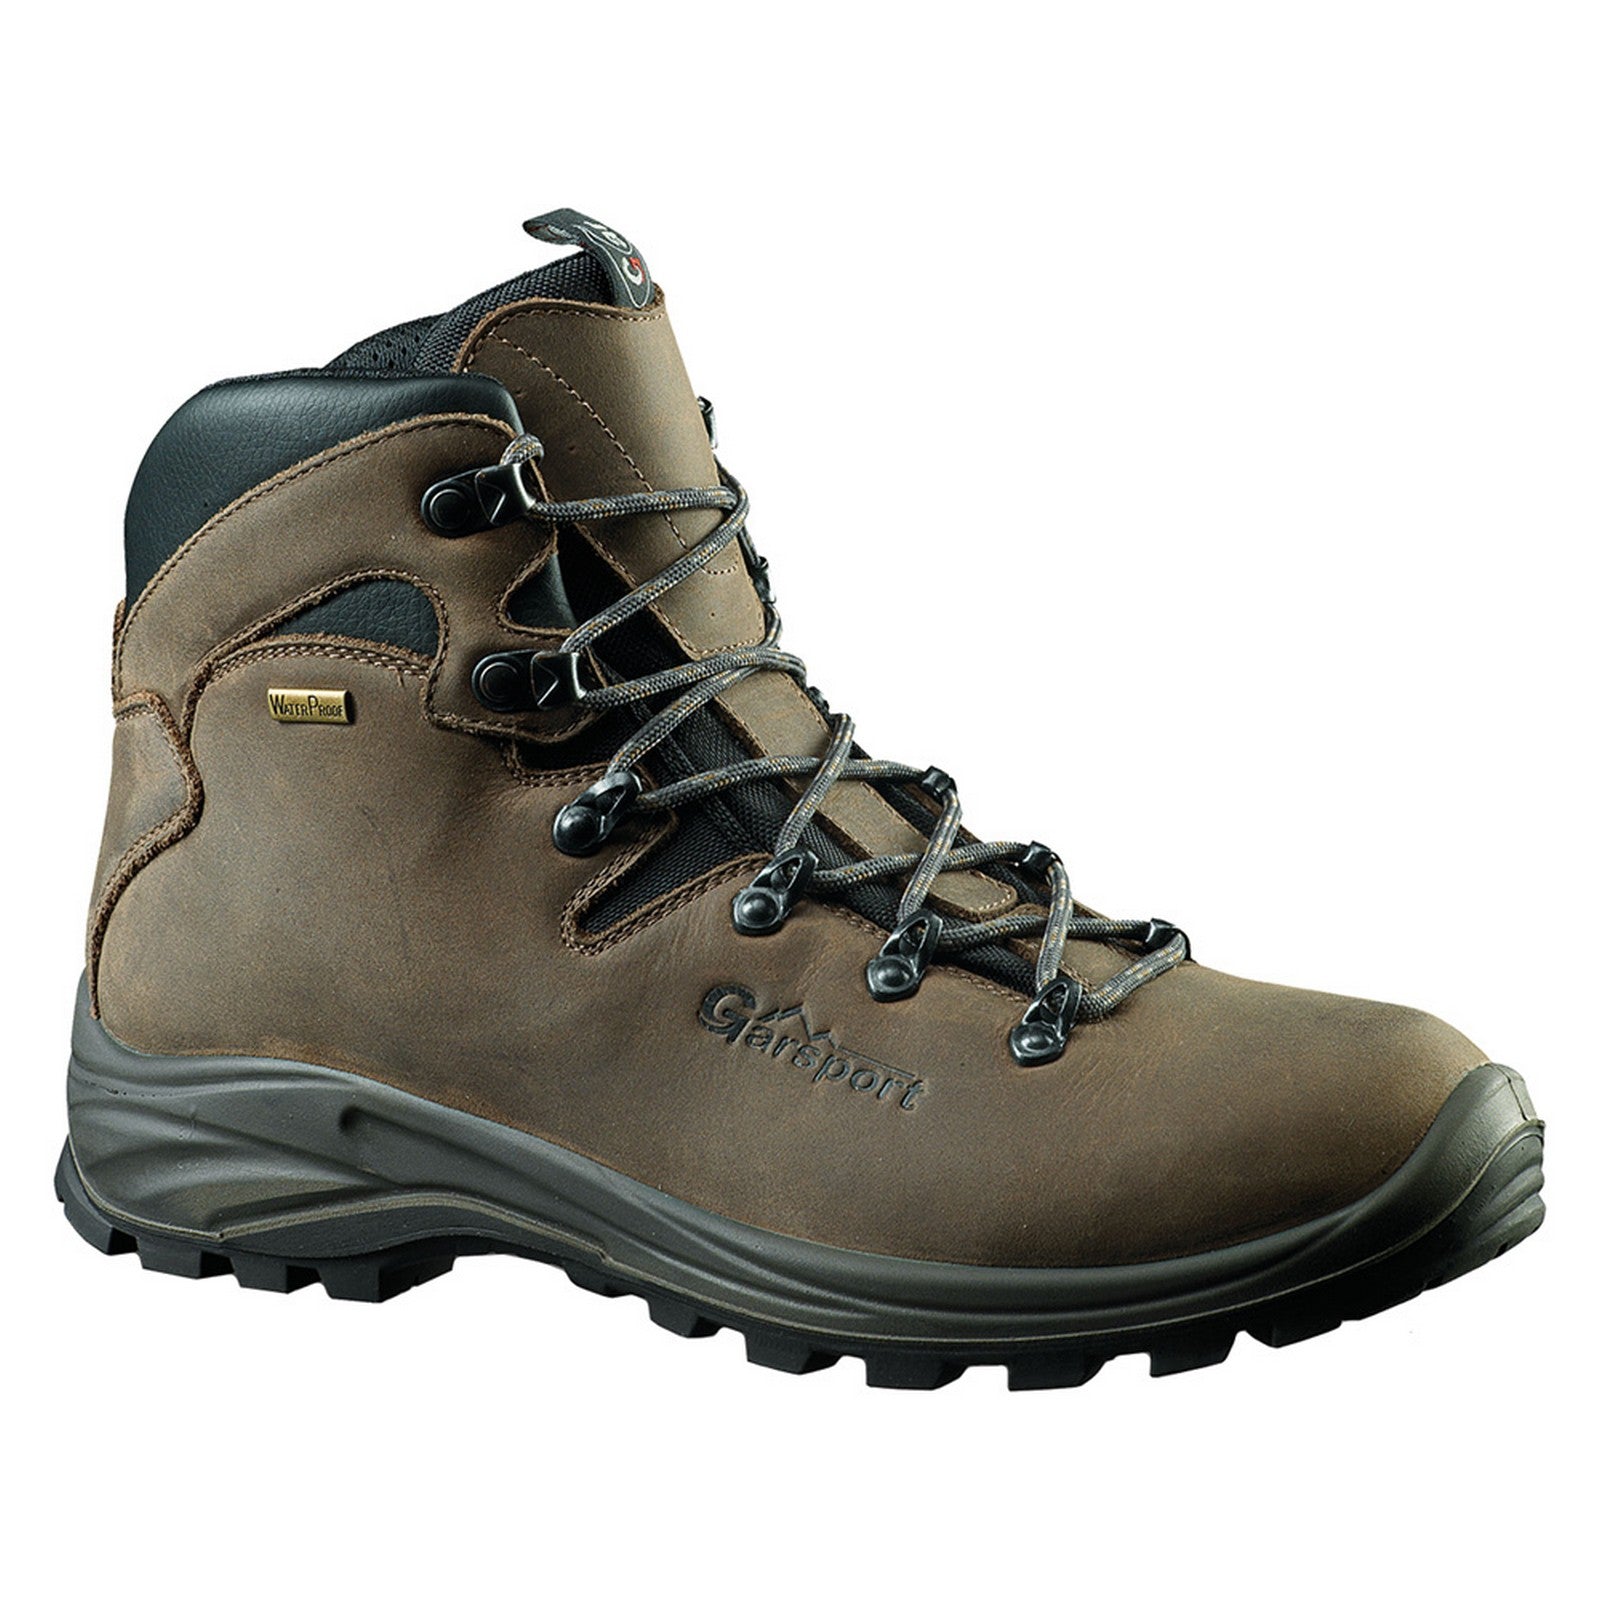 1coppia scarpe per trekking alte 'stelvio tex' n. 42 - marrone cod:ferx.1061232nlm